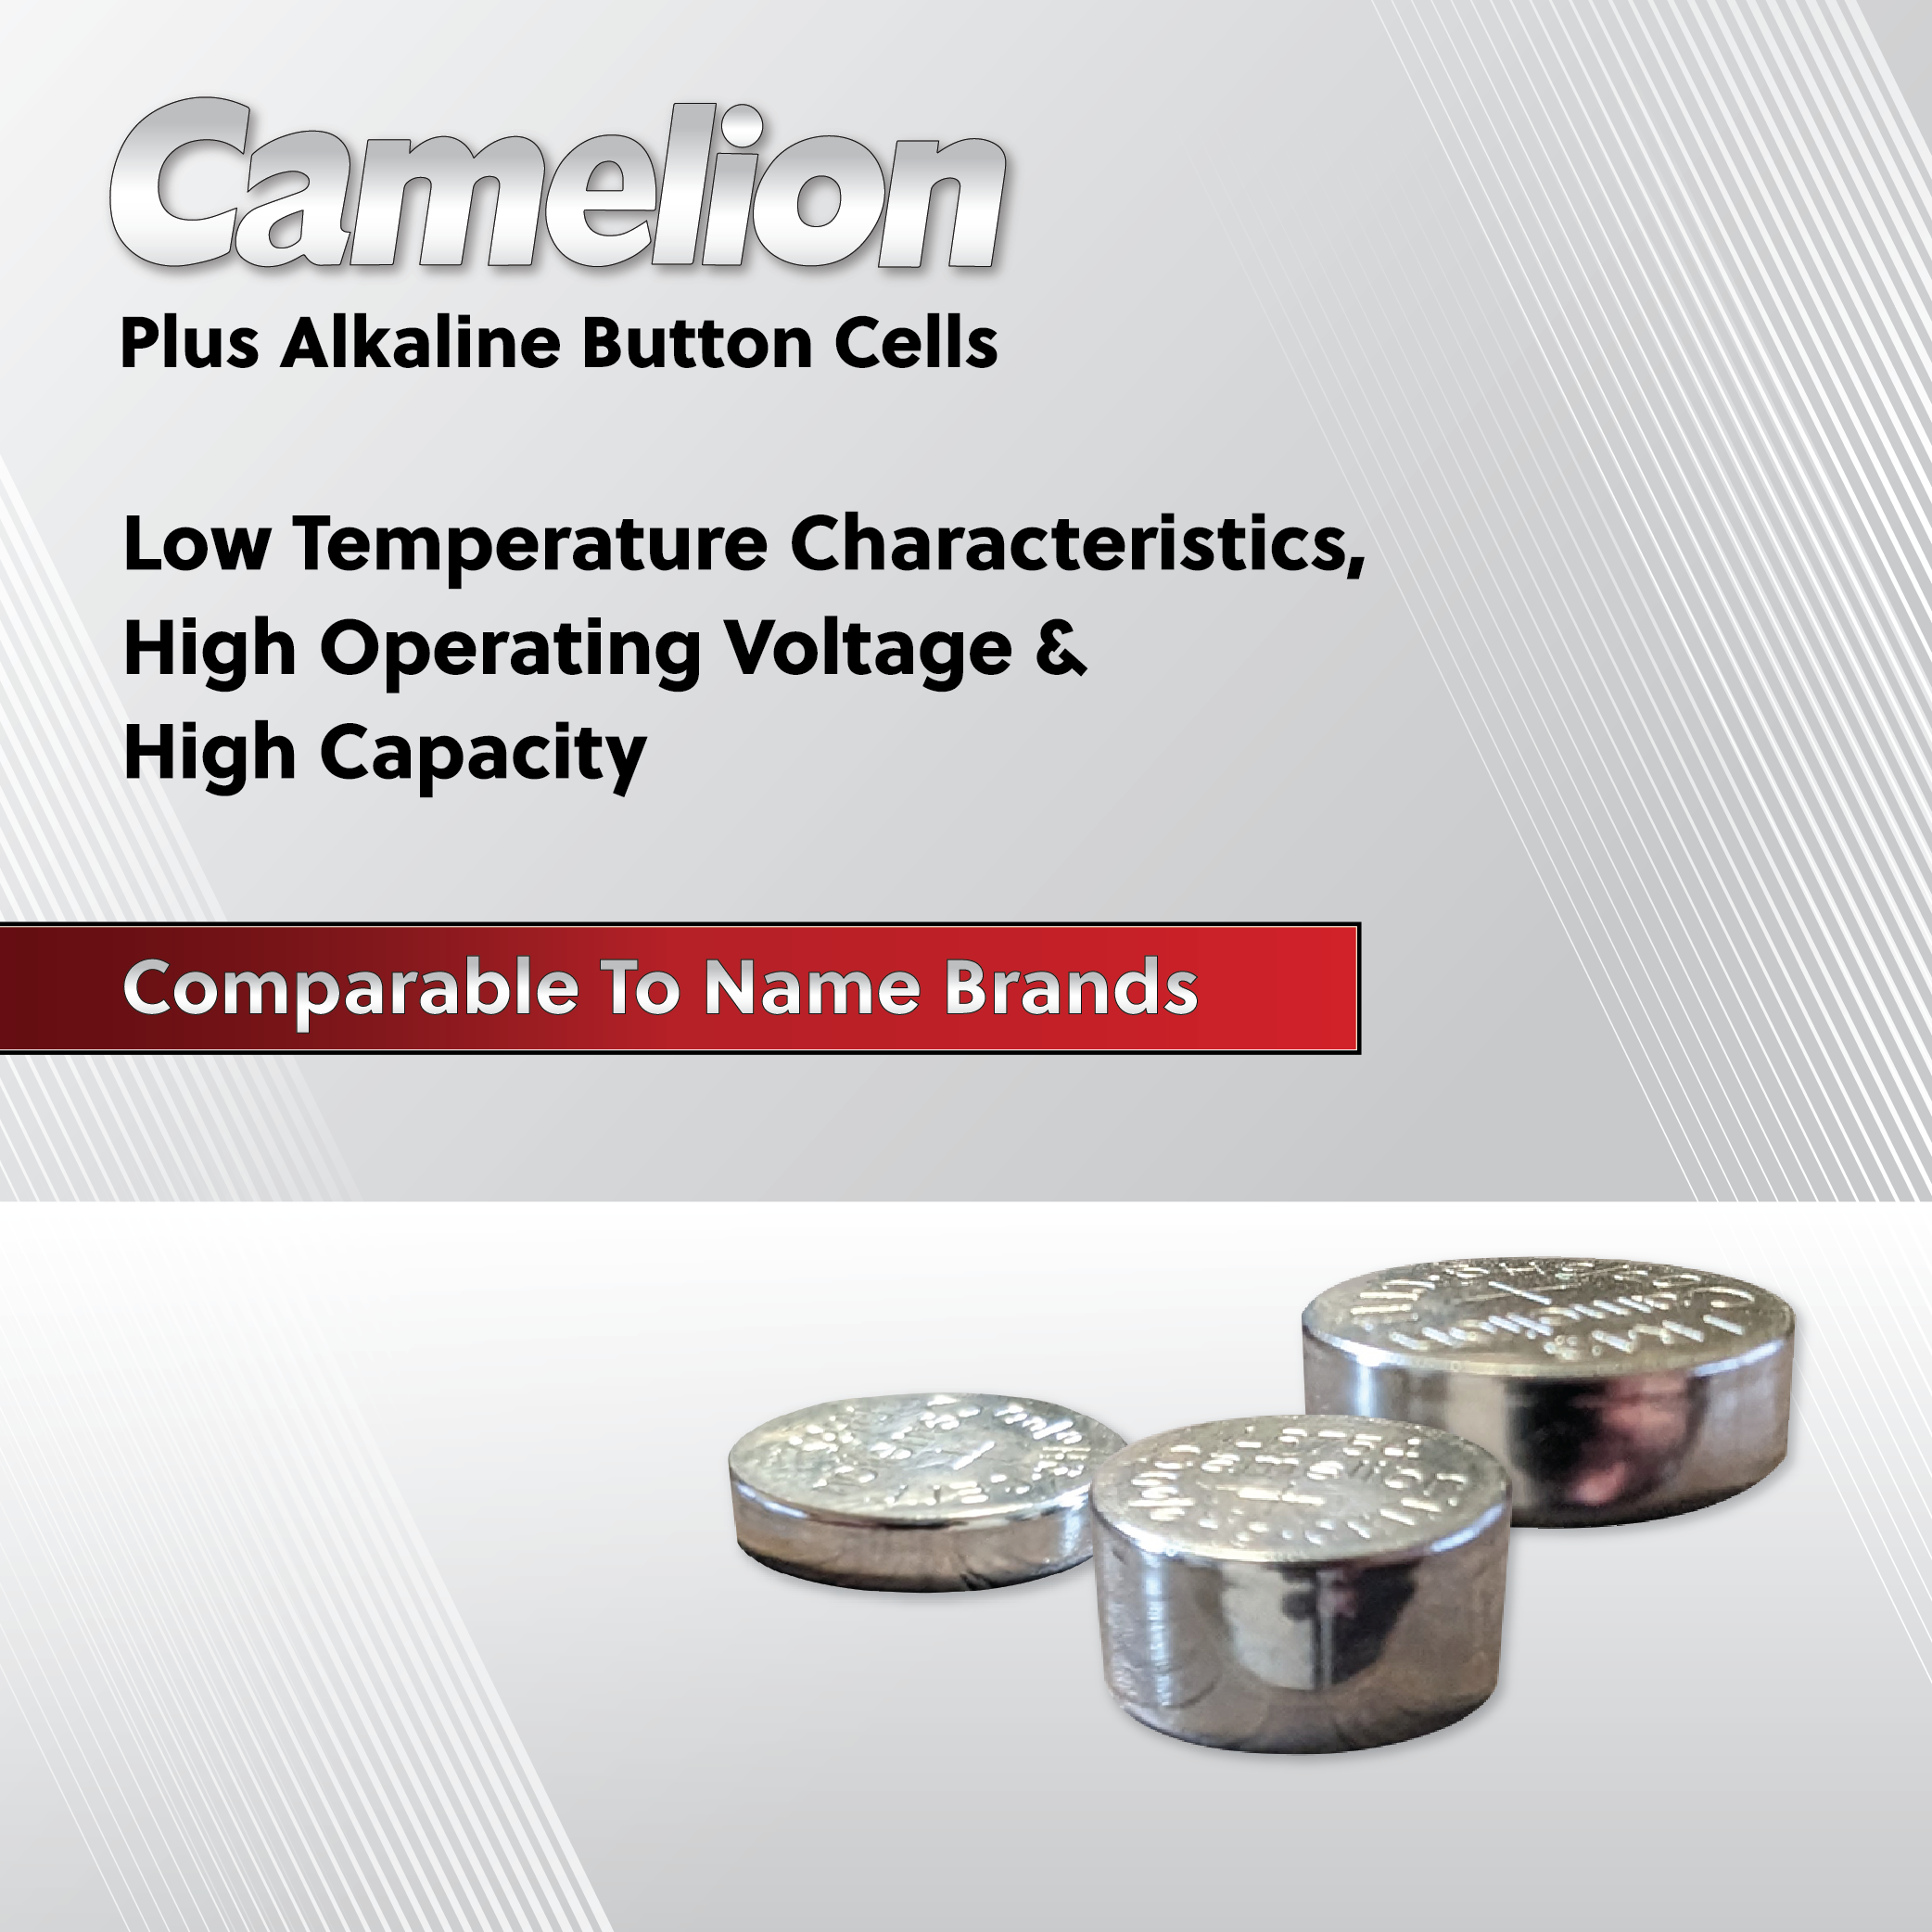 Camelion AG13 / G13 / LR44 / A76 / SR44W / GP76A / 357 (Three Packaging Options)